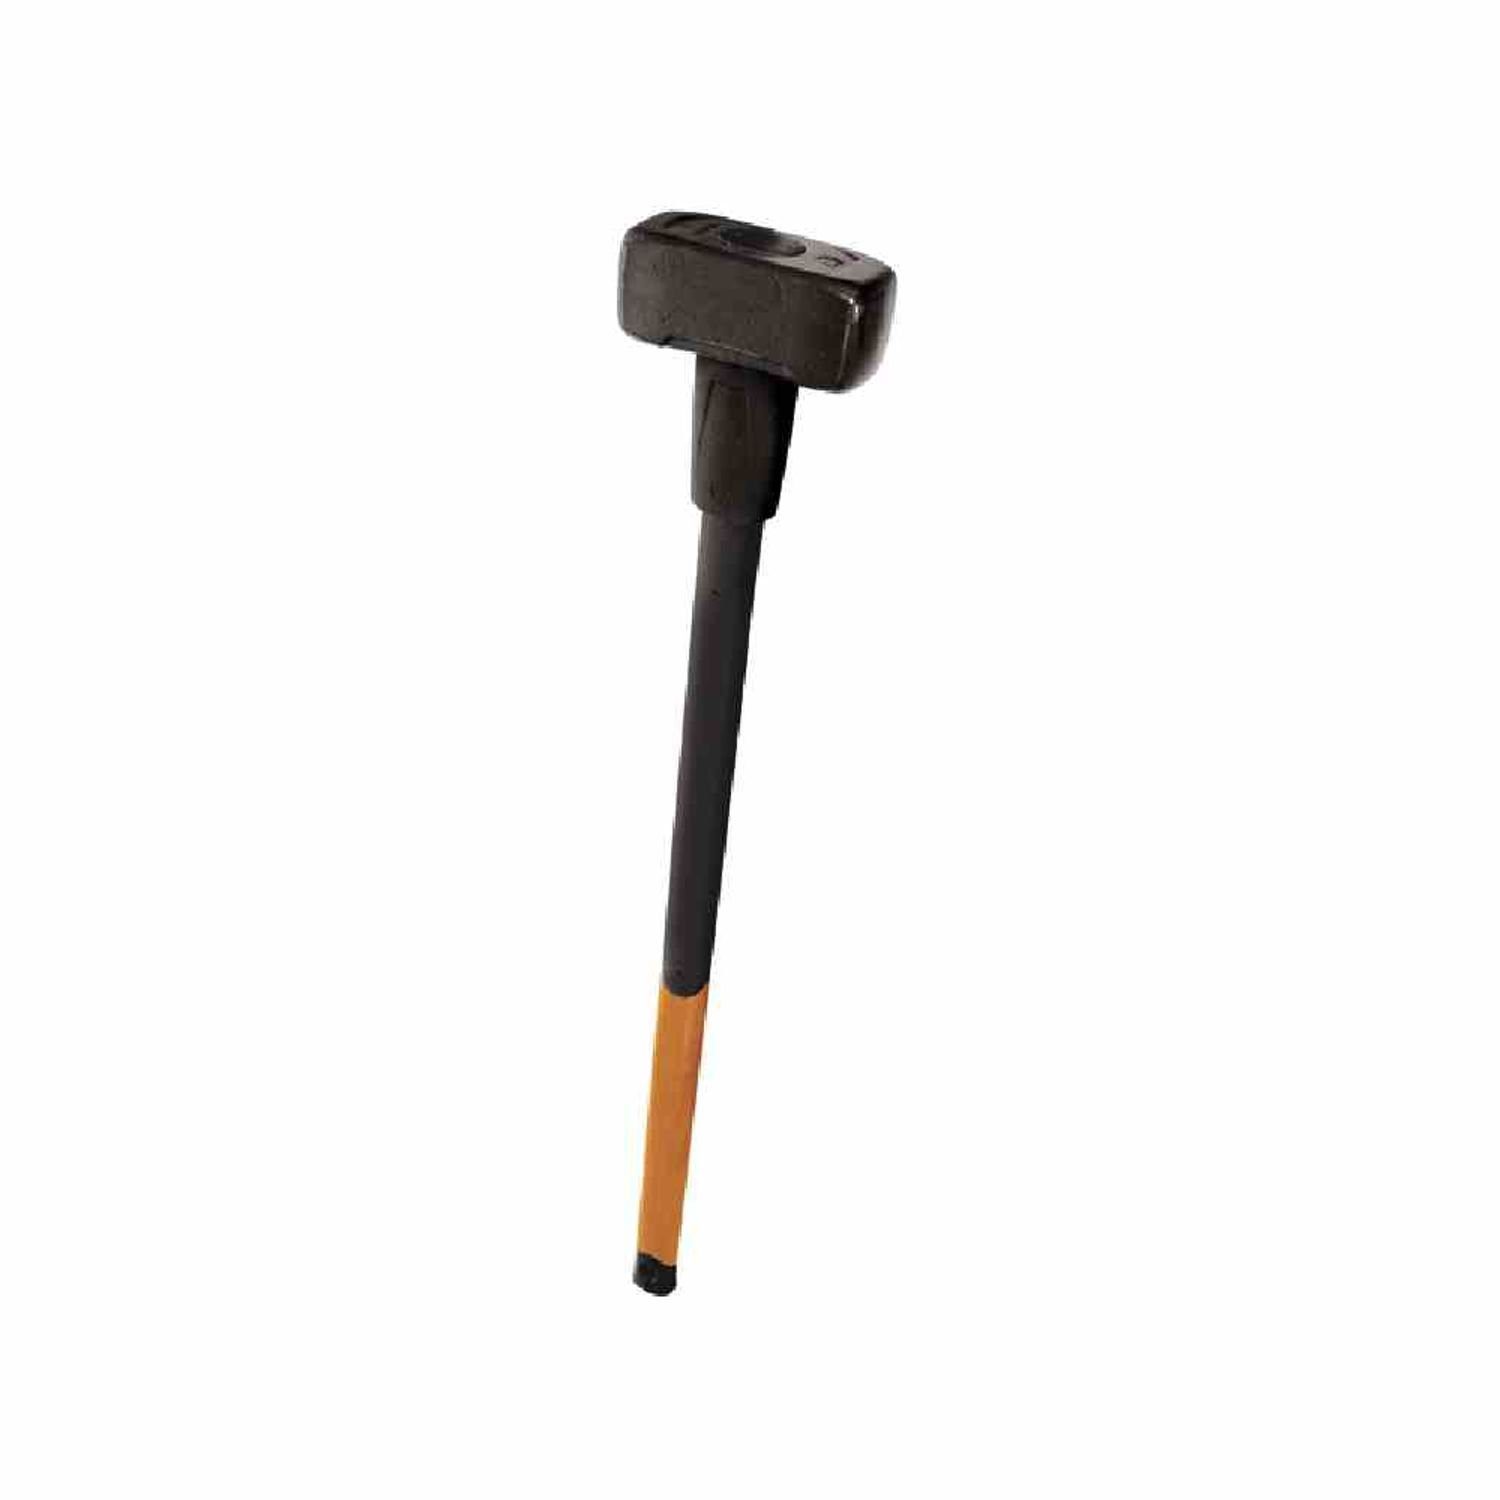 Fiskars Hammer Kopf: Vorschlaghammer 4kg 90cm 5kg, Länge